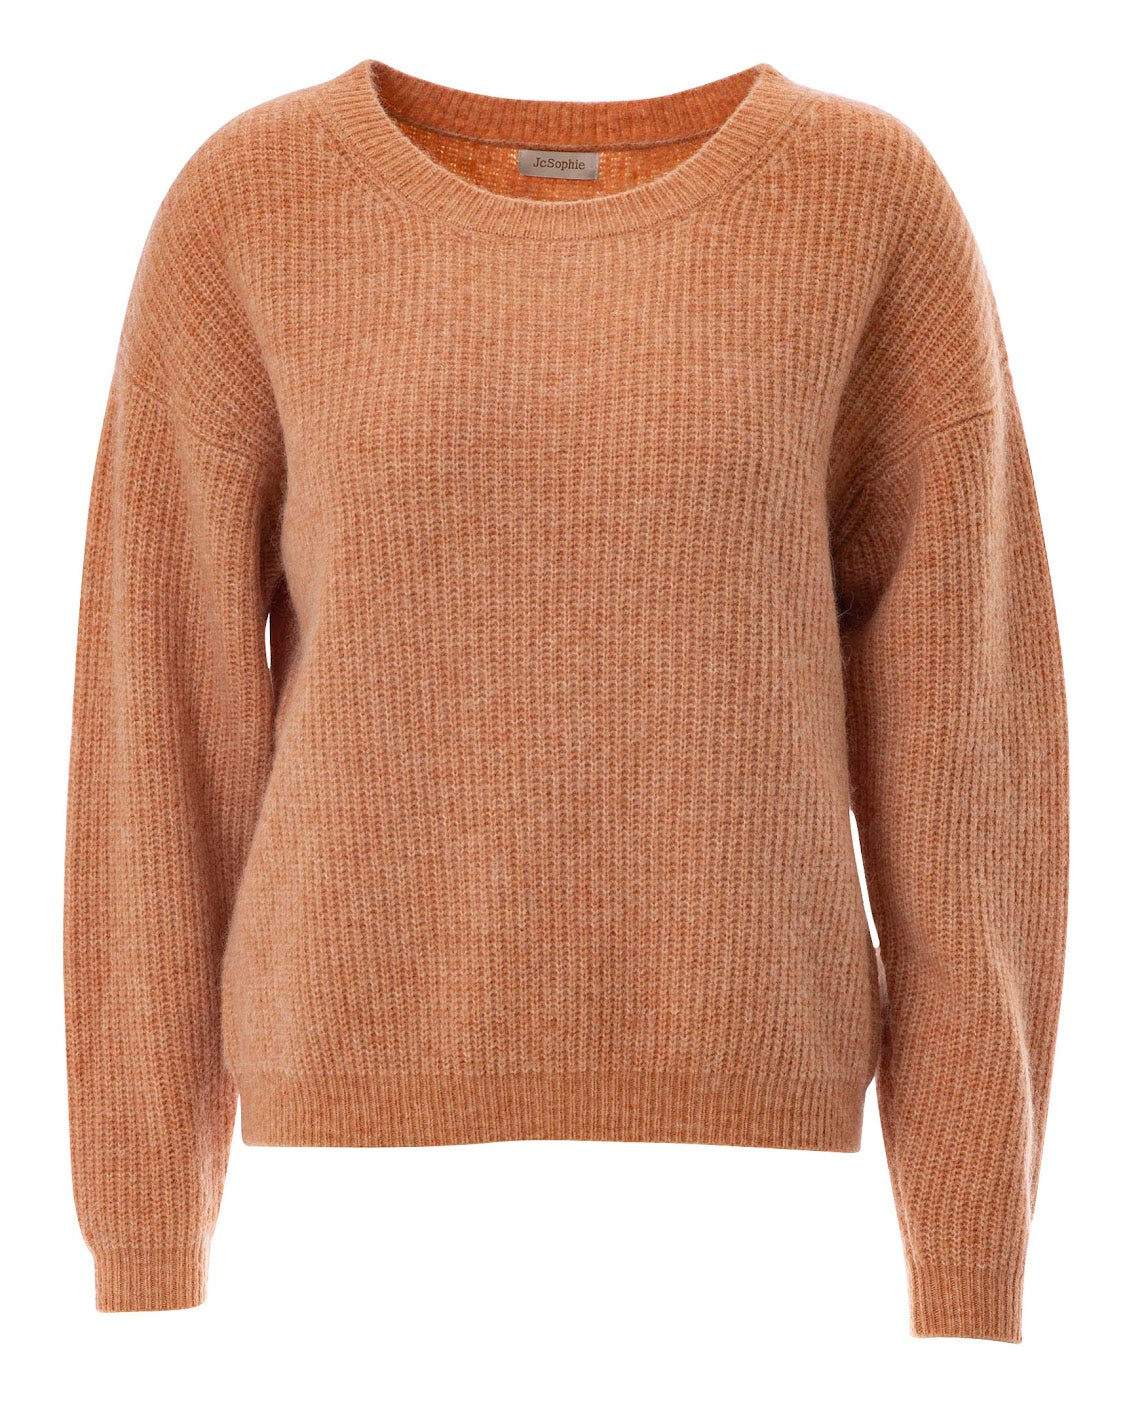 JcSophie - Sweater Piper Ginger Orange